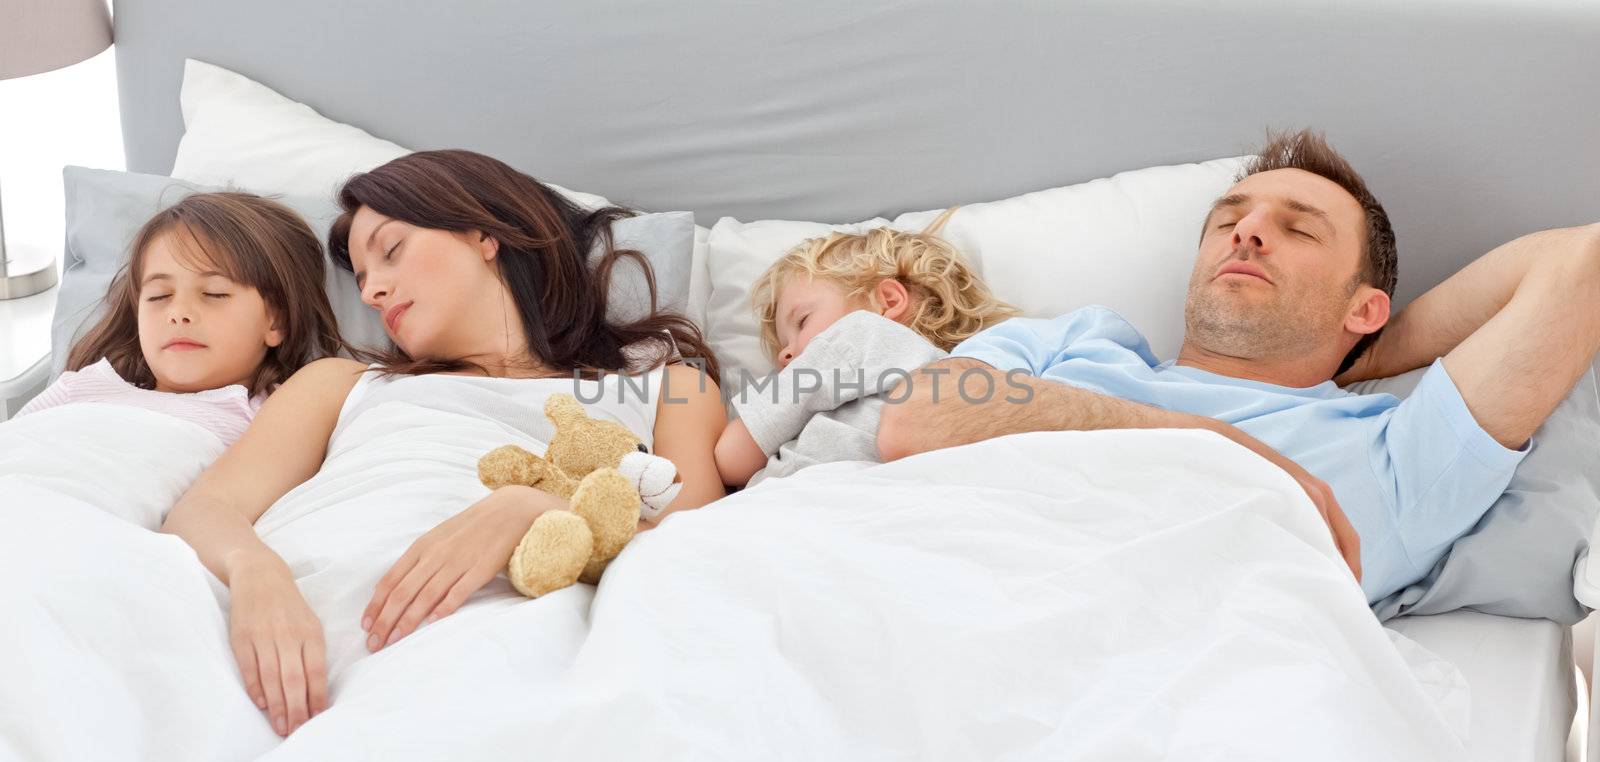 Cute family sleeping together by Wavebreakmedia